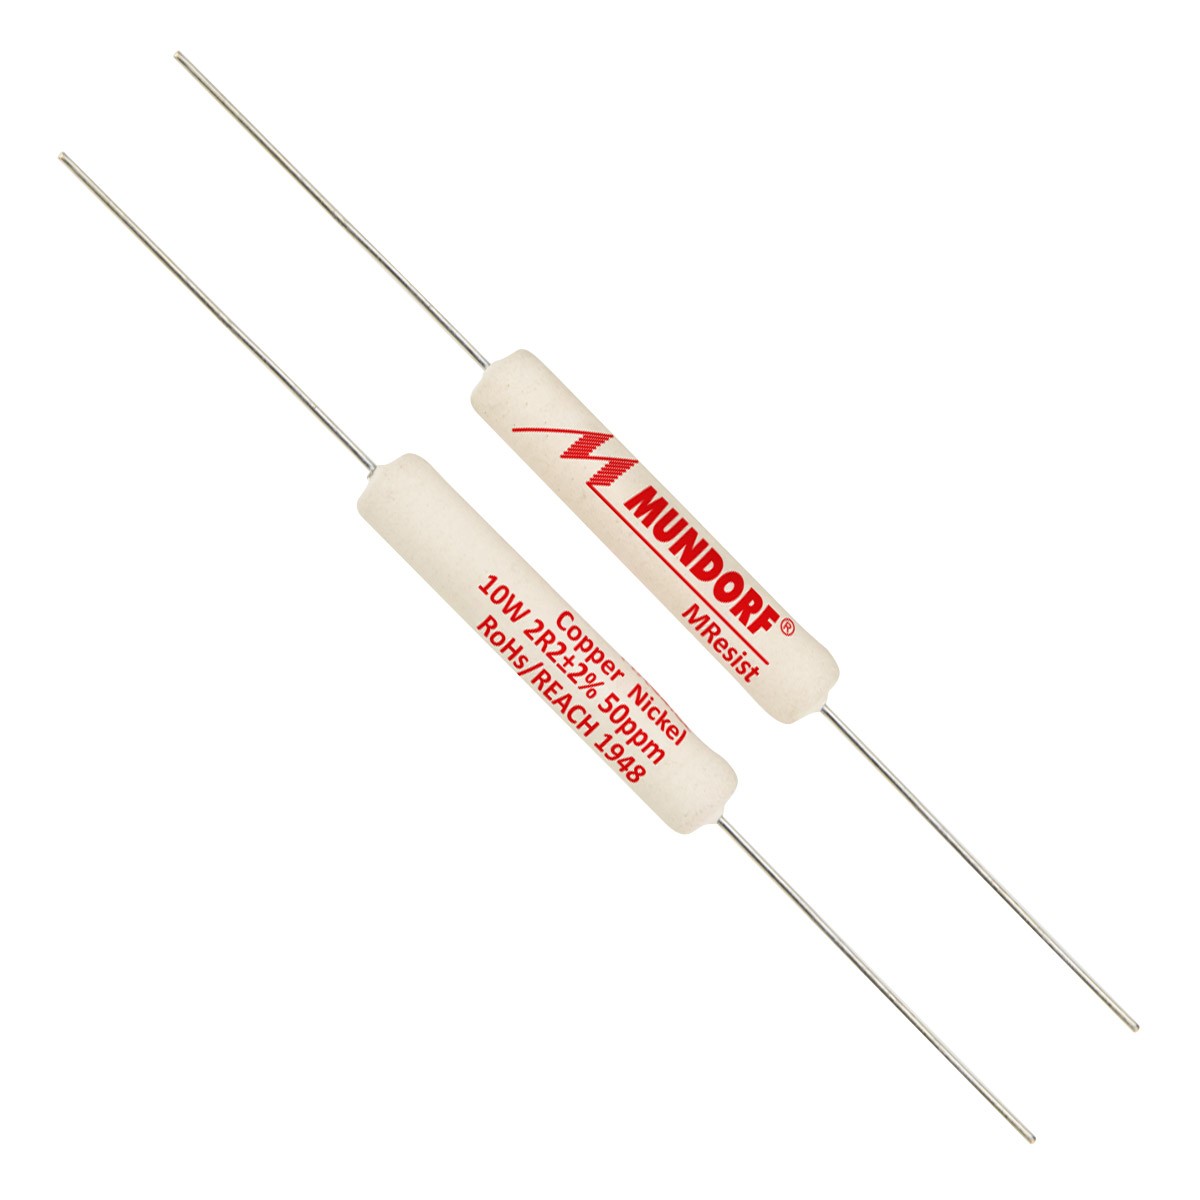 MUNDORF MRESIST CLASSIC Resistor 10W 2.7 Ohm